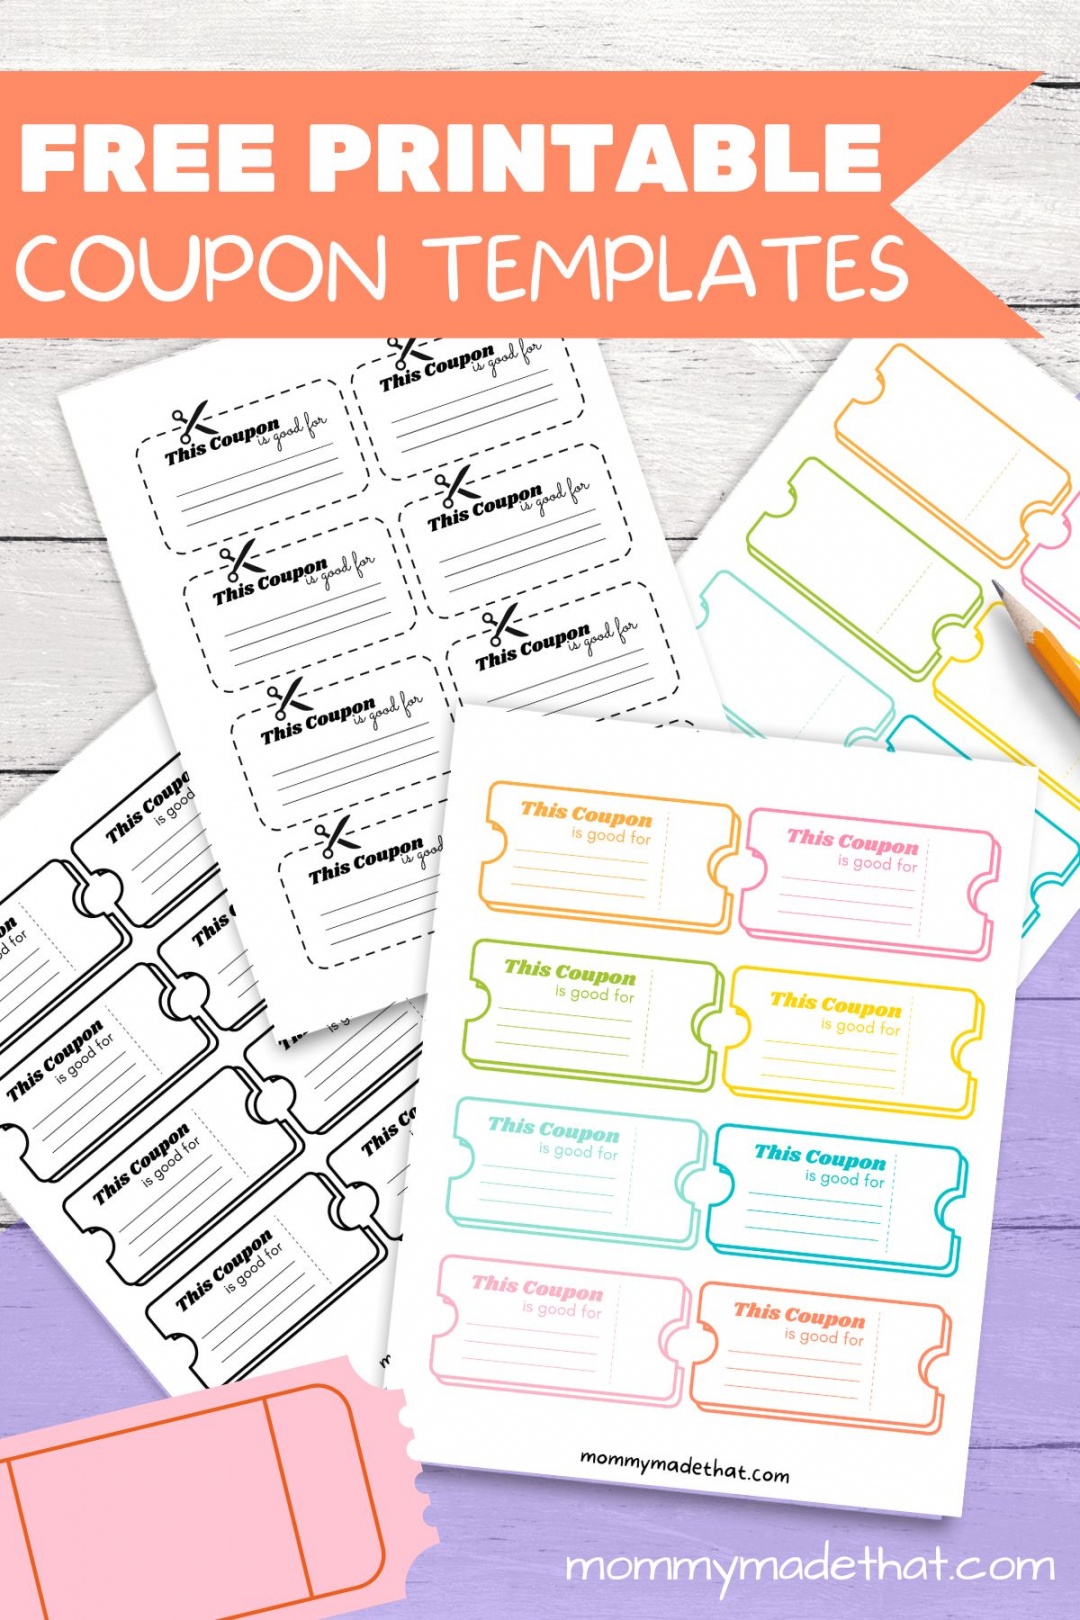 Printable Coupons For Free - Printable - Lots of Blank Coupon Templates (Free Printables!)